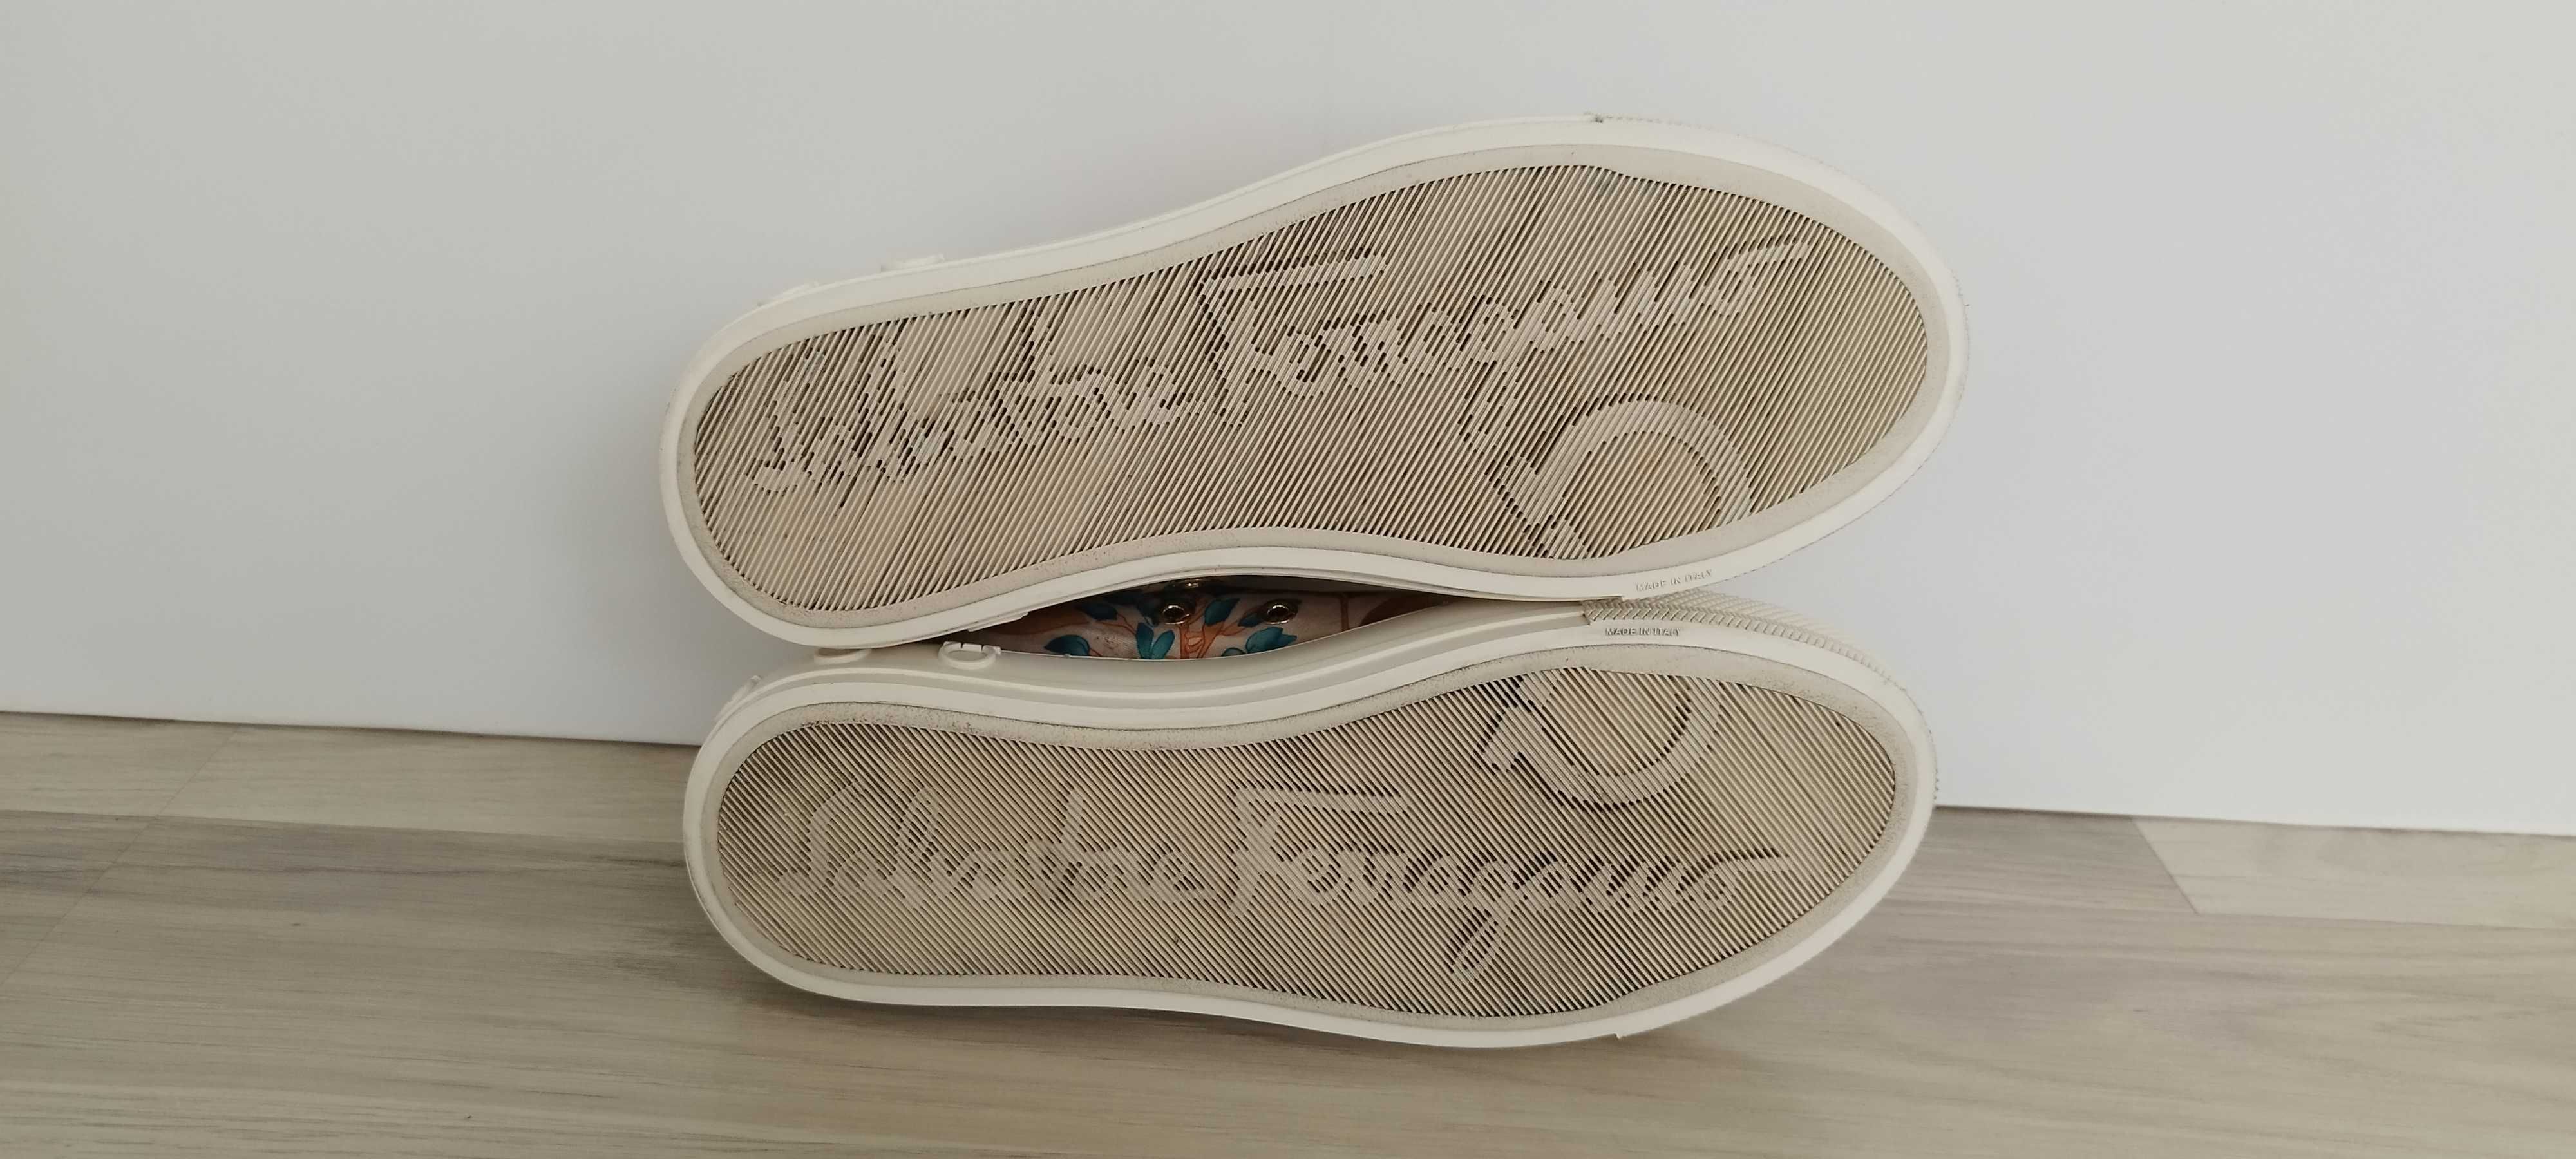 Salvatore Ferragamo sneakers